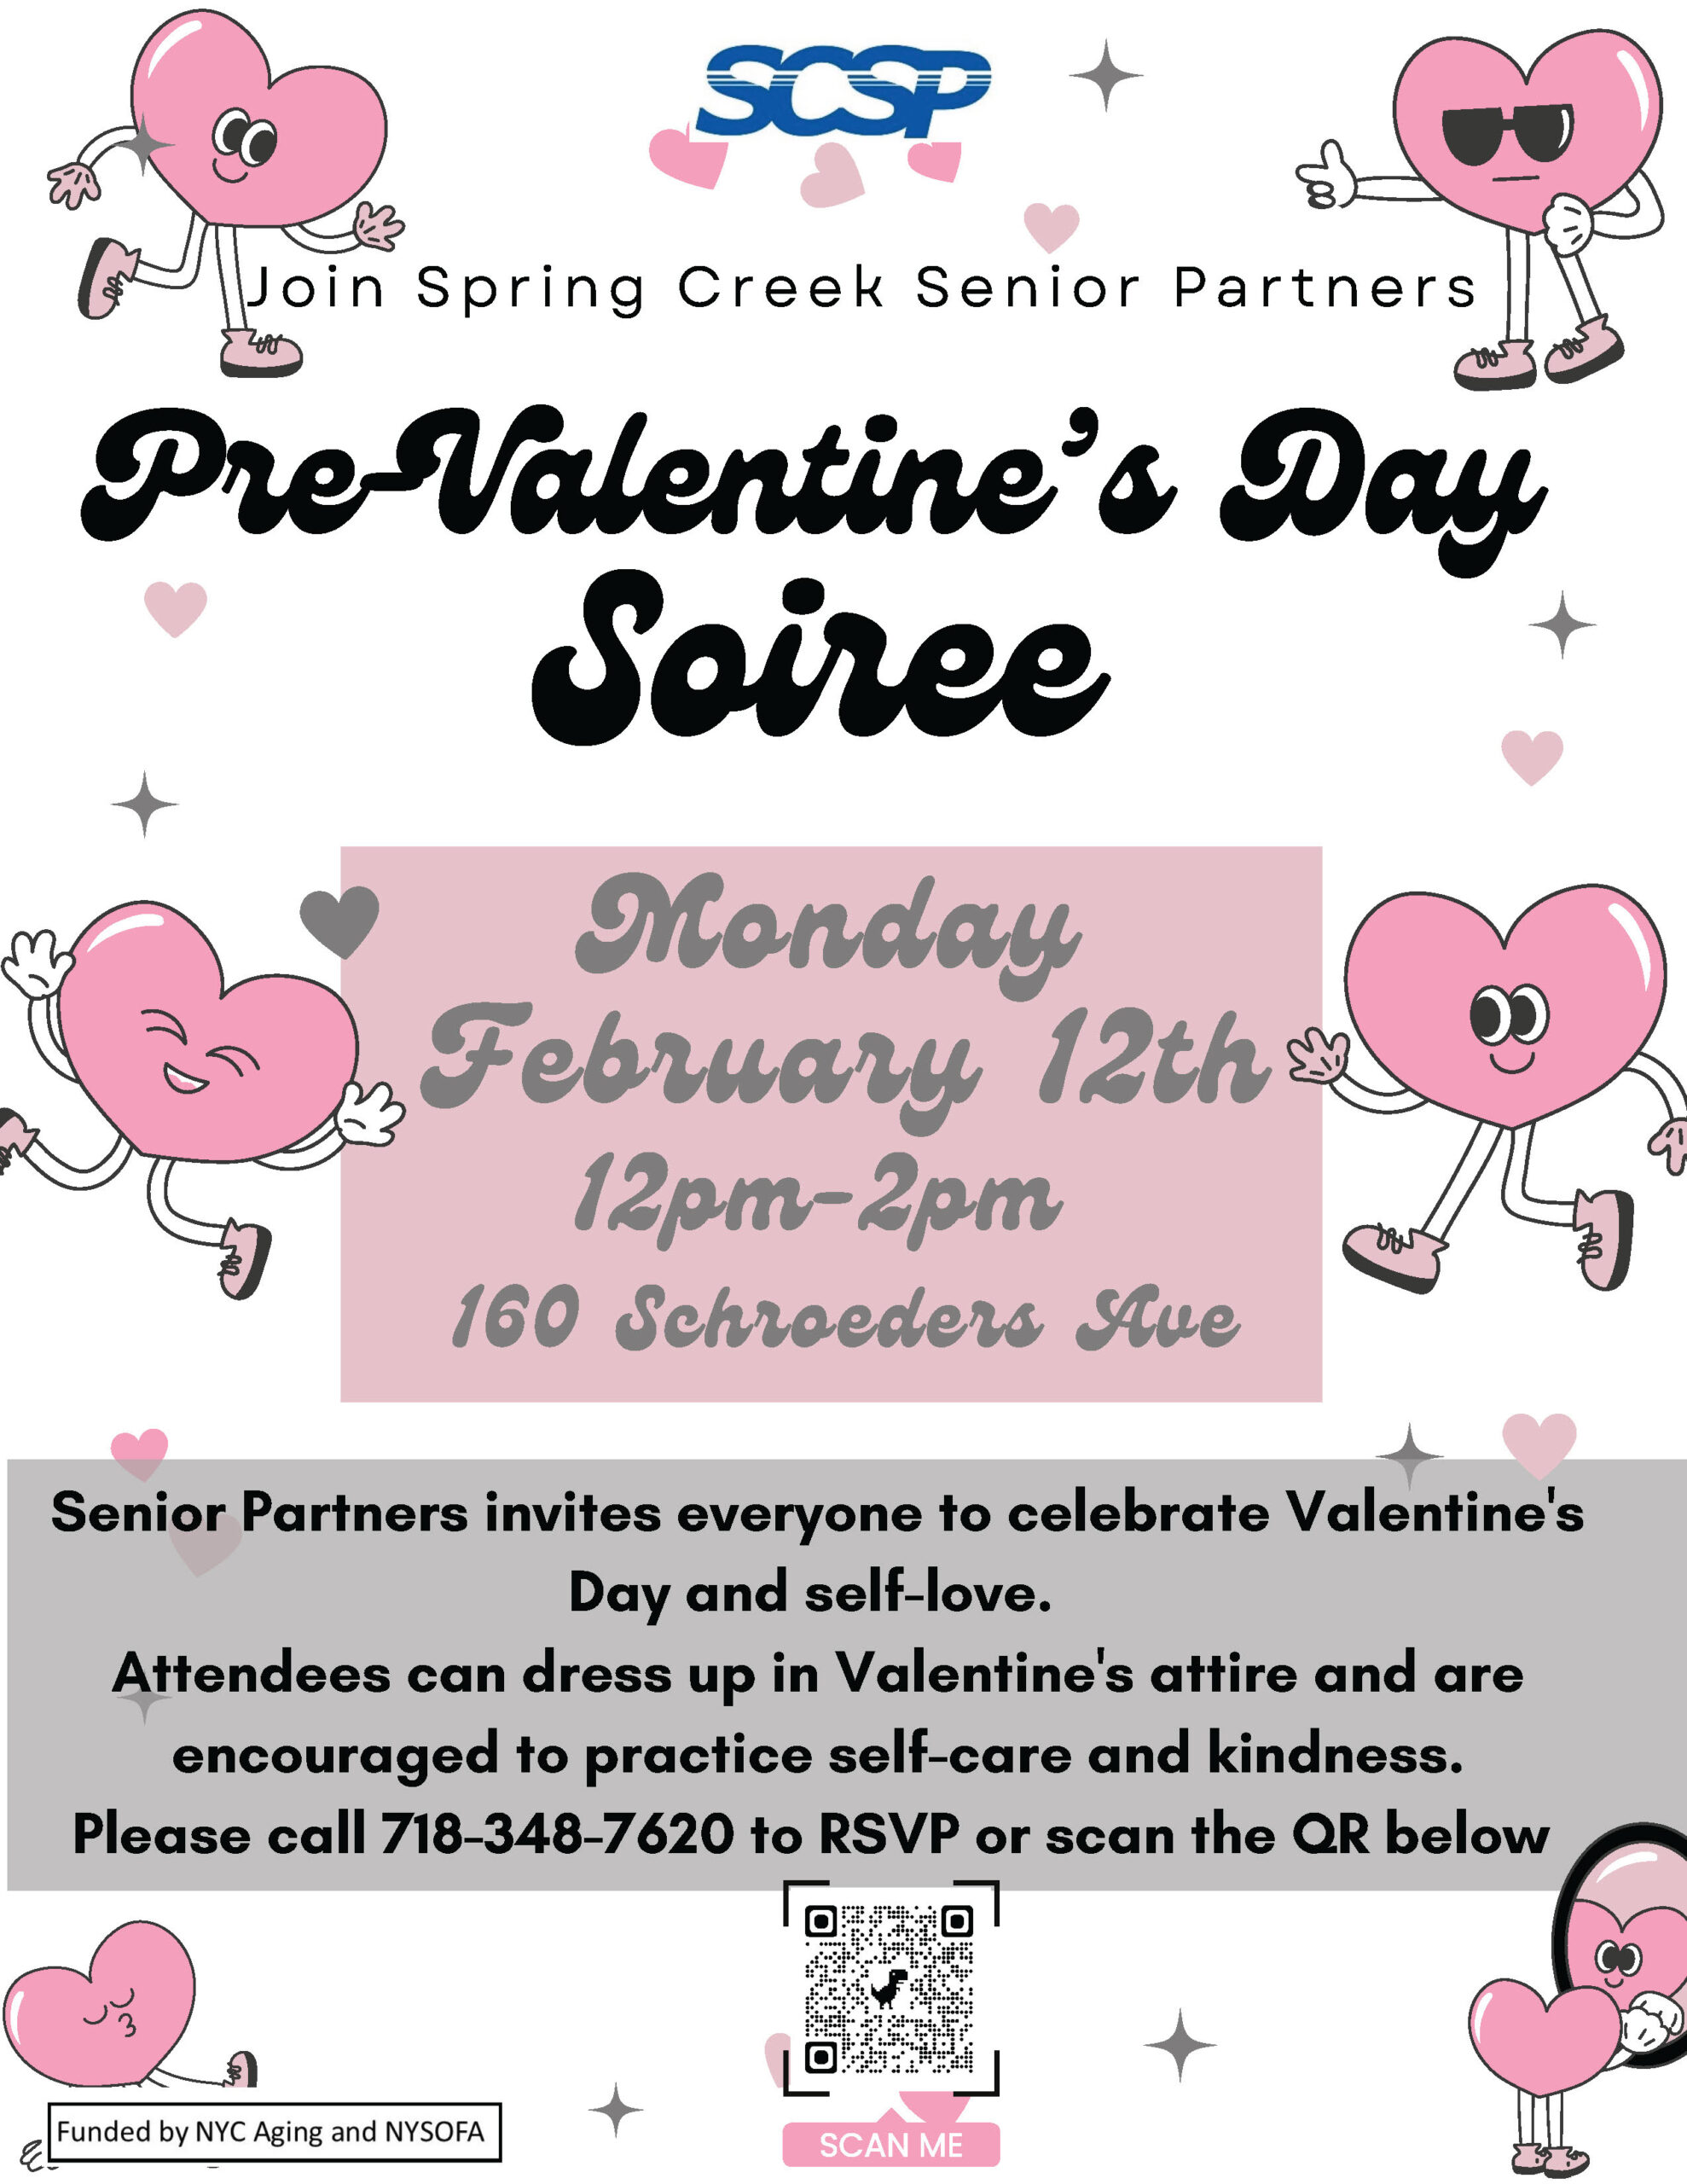 SCSP Pre Valentines Soiree Flyer